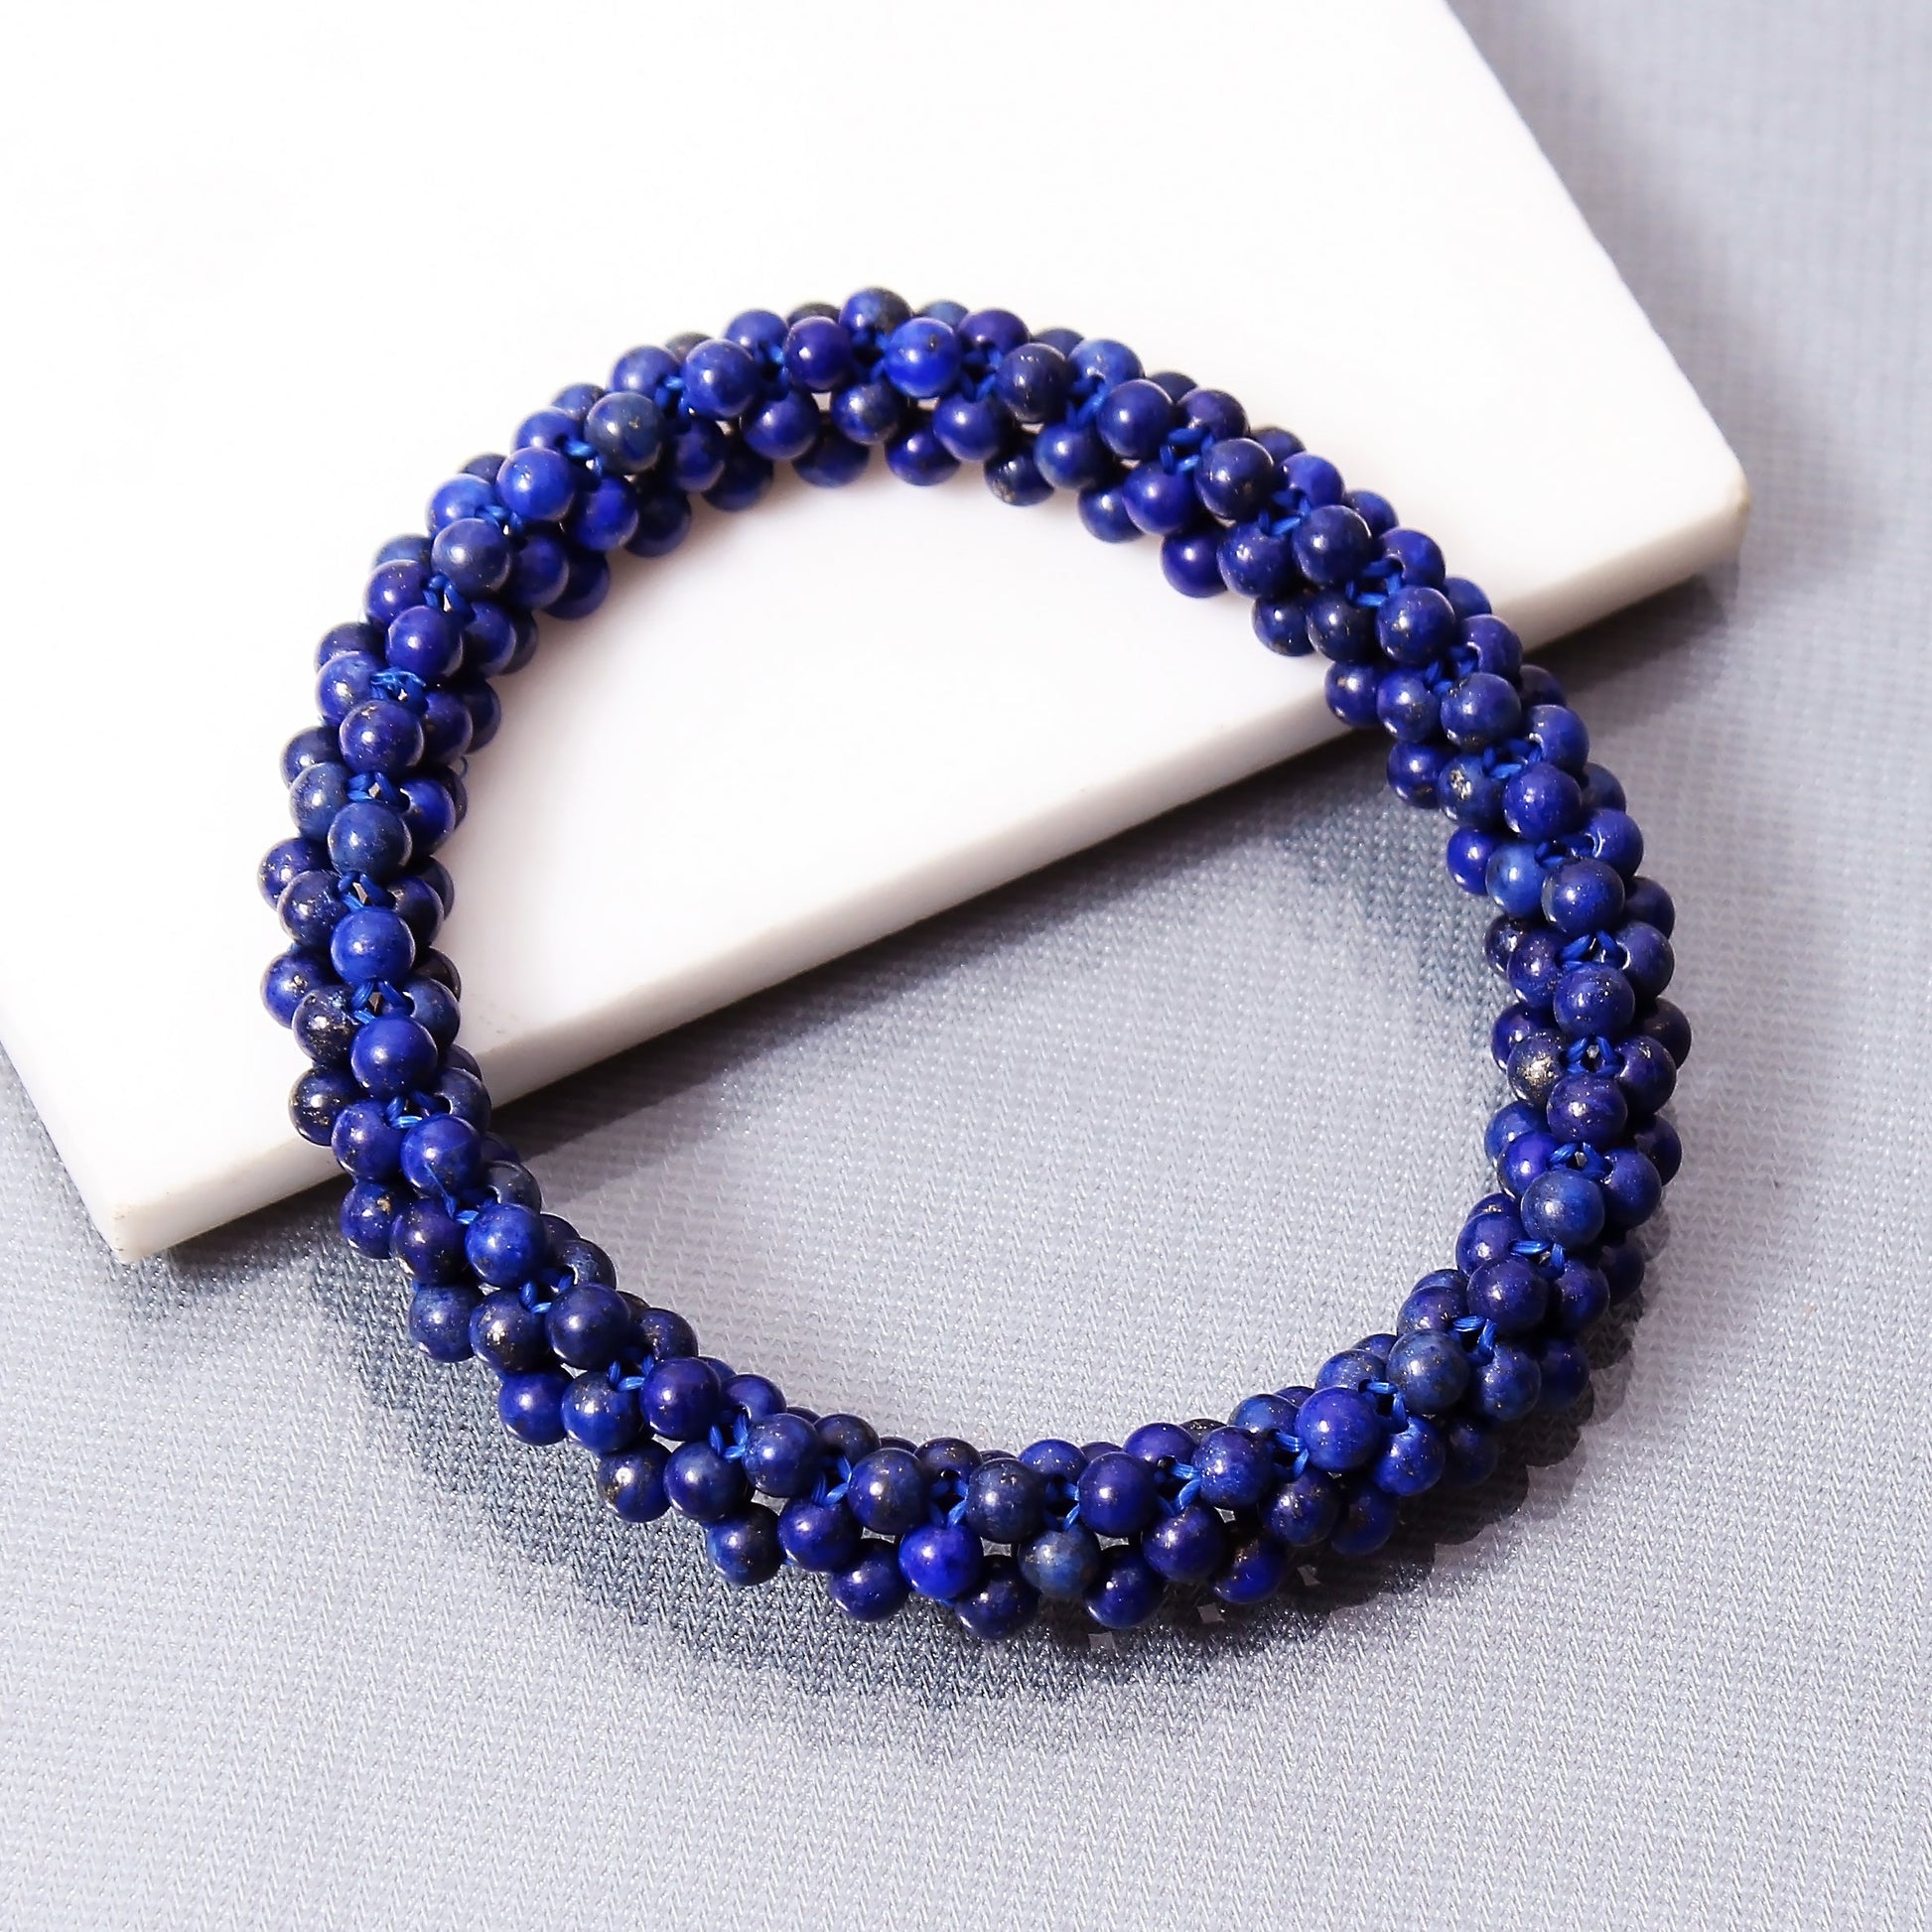 Hand woven Lapis Lazuli Gemstone Bracelet - 6 Inch GemsRush